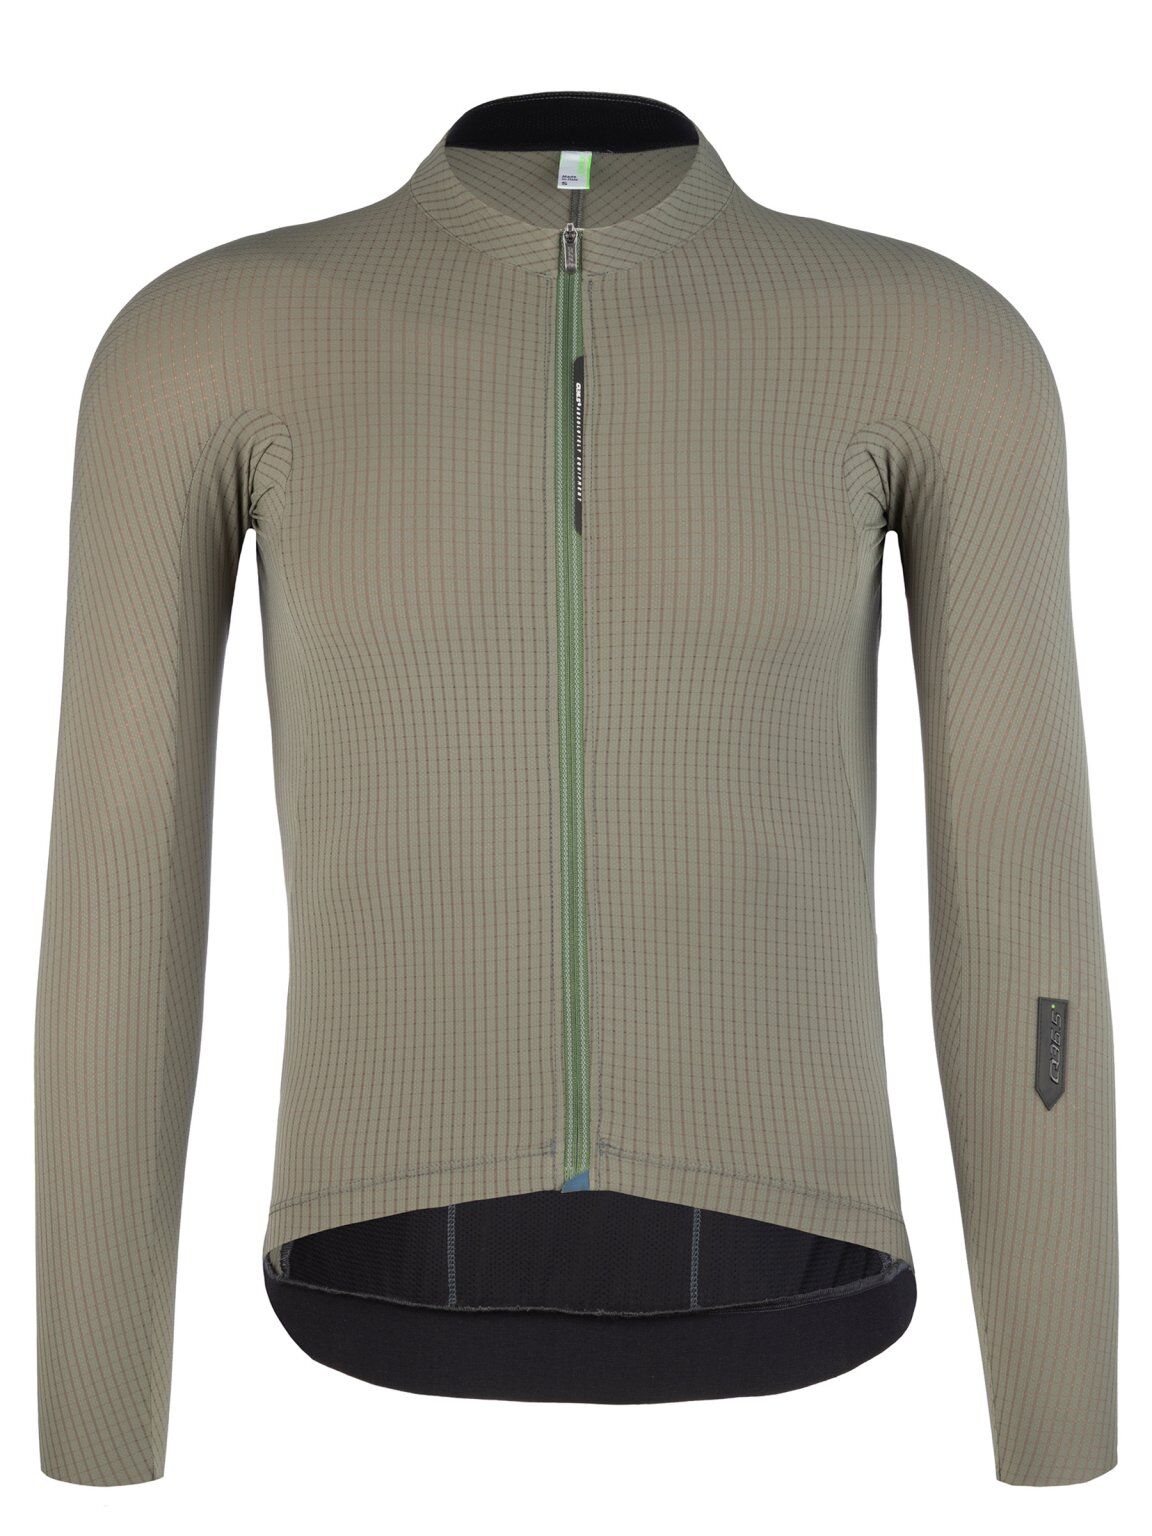 Q36.5 Jersey Long Sleeve L1 Pinstripe X - Cycling jersey - Men's